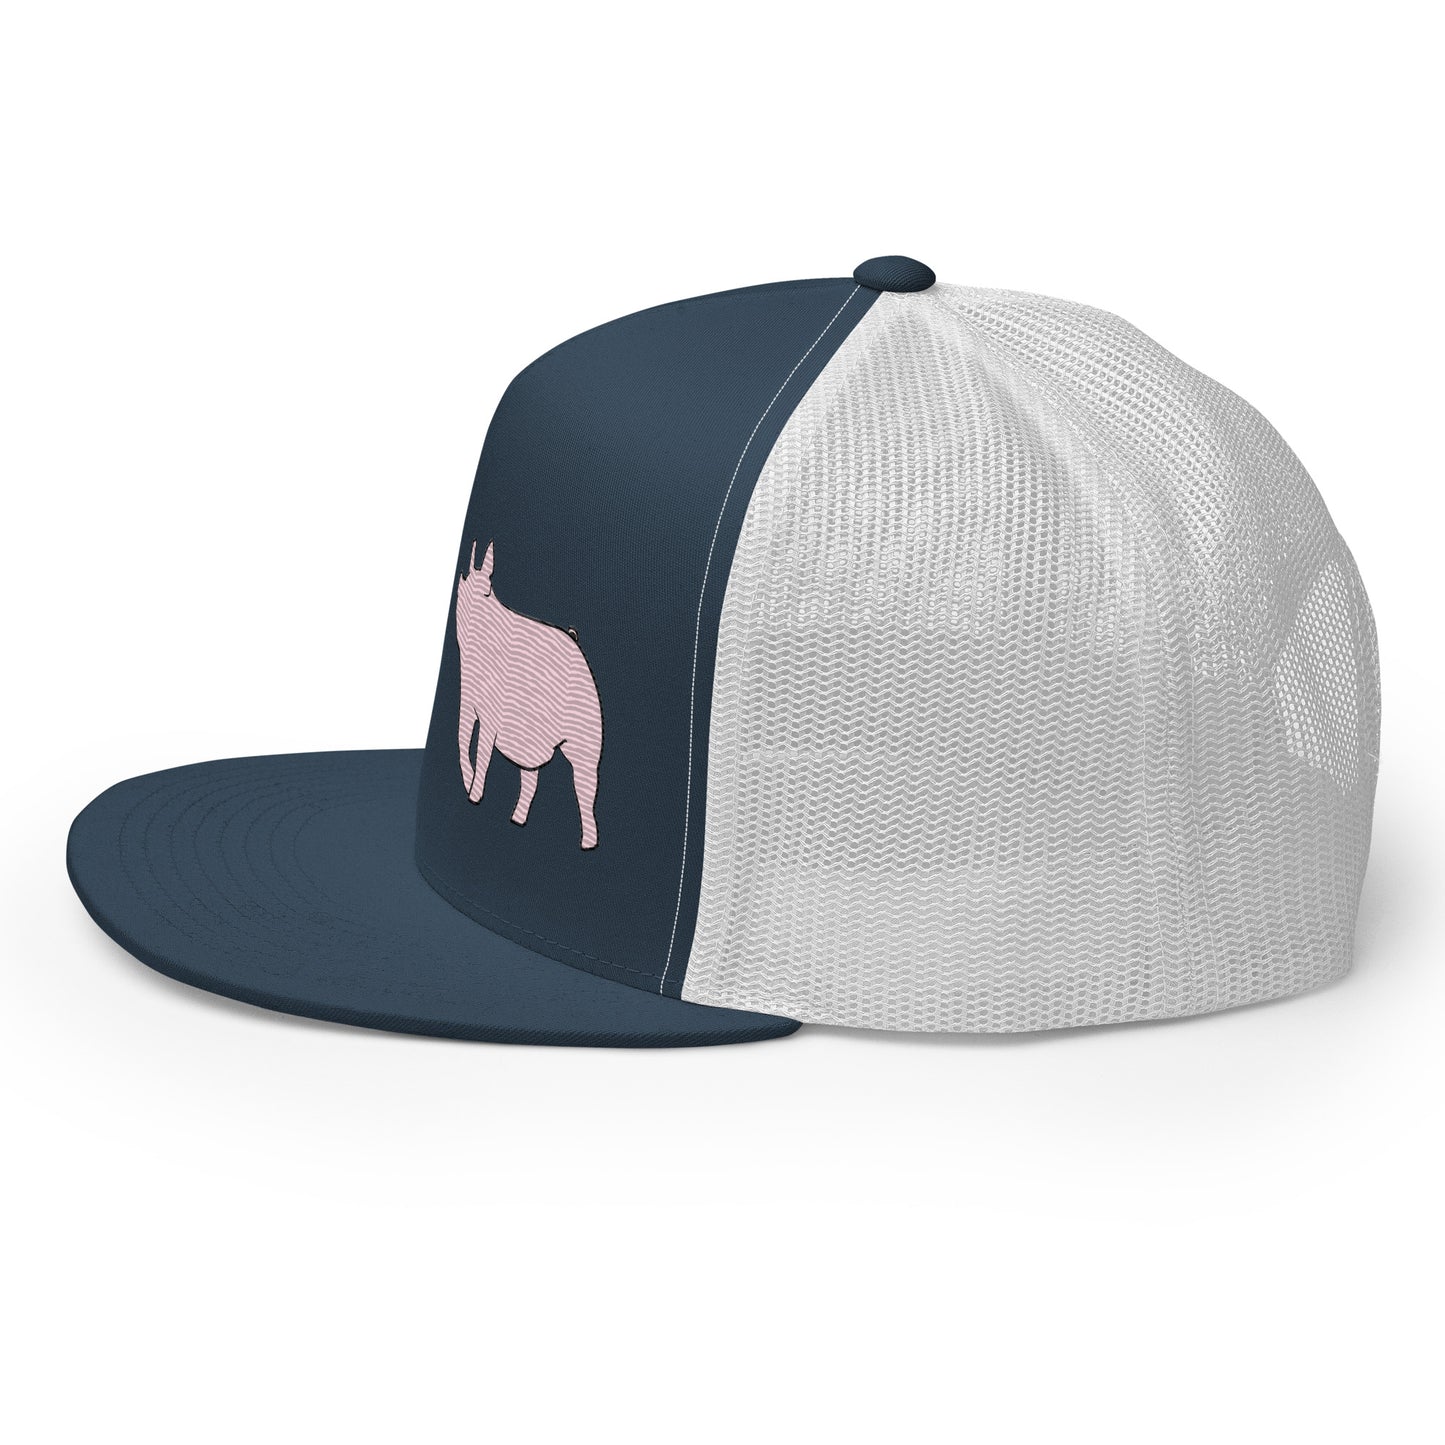 Pig Trucker Cap| hat